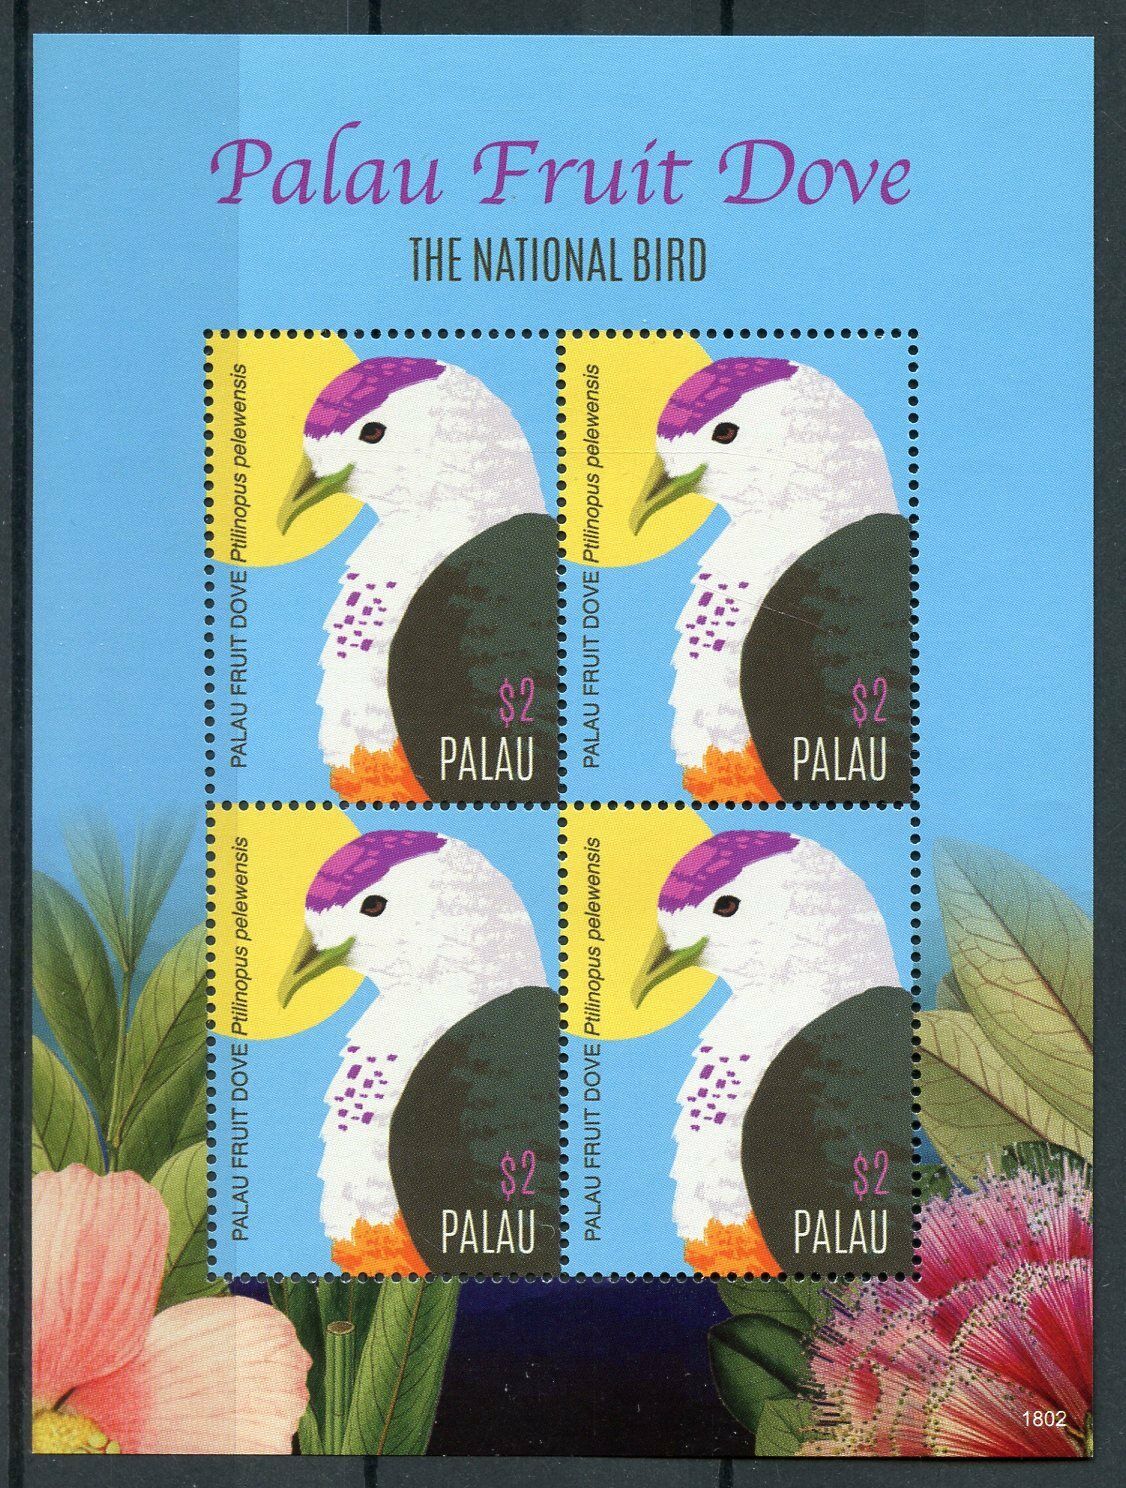 Palau 2018 MNH Birds on Stamps Palau Fruit Dove National Bird Doves 4v M/S